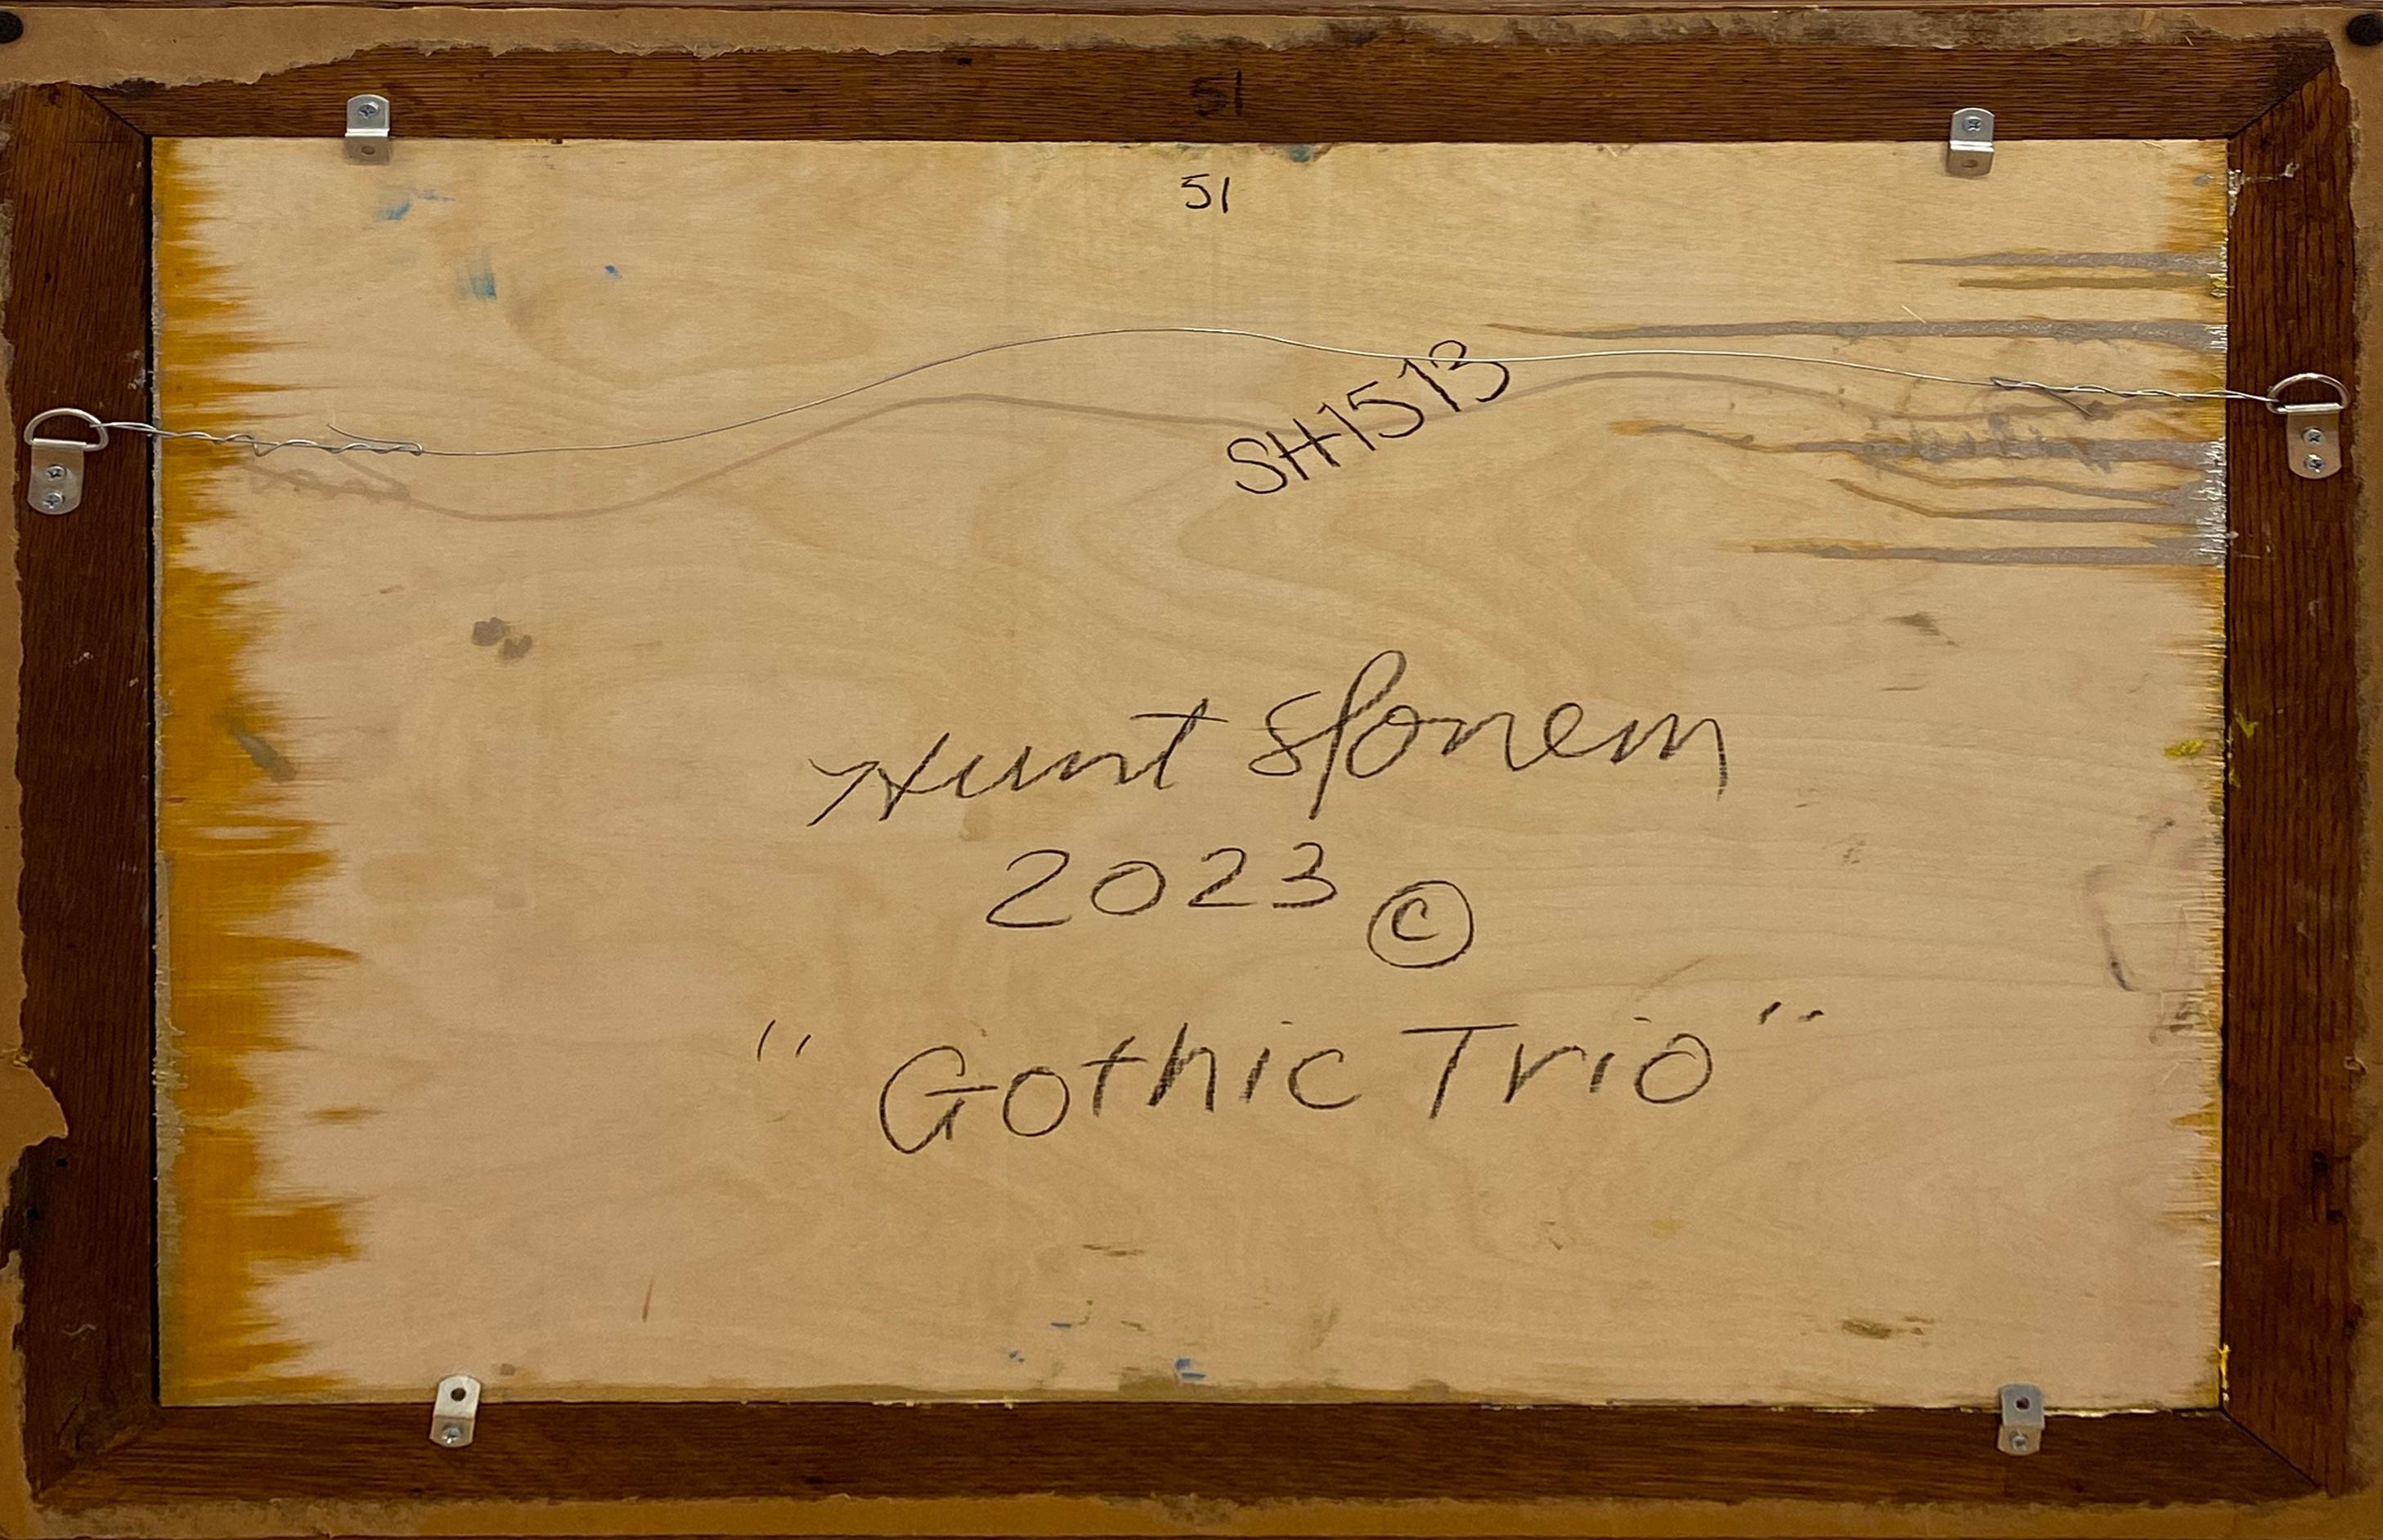 Artist:  Slonem, Hunt
Title:  Gothic Trio
Series:  Bunnies
Date:  2023
Medium:  Oil on Wood
Unframed Dimensions:  21